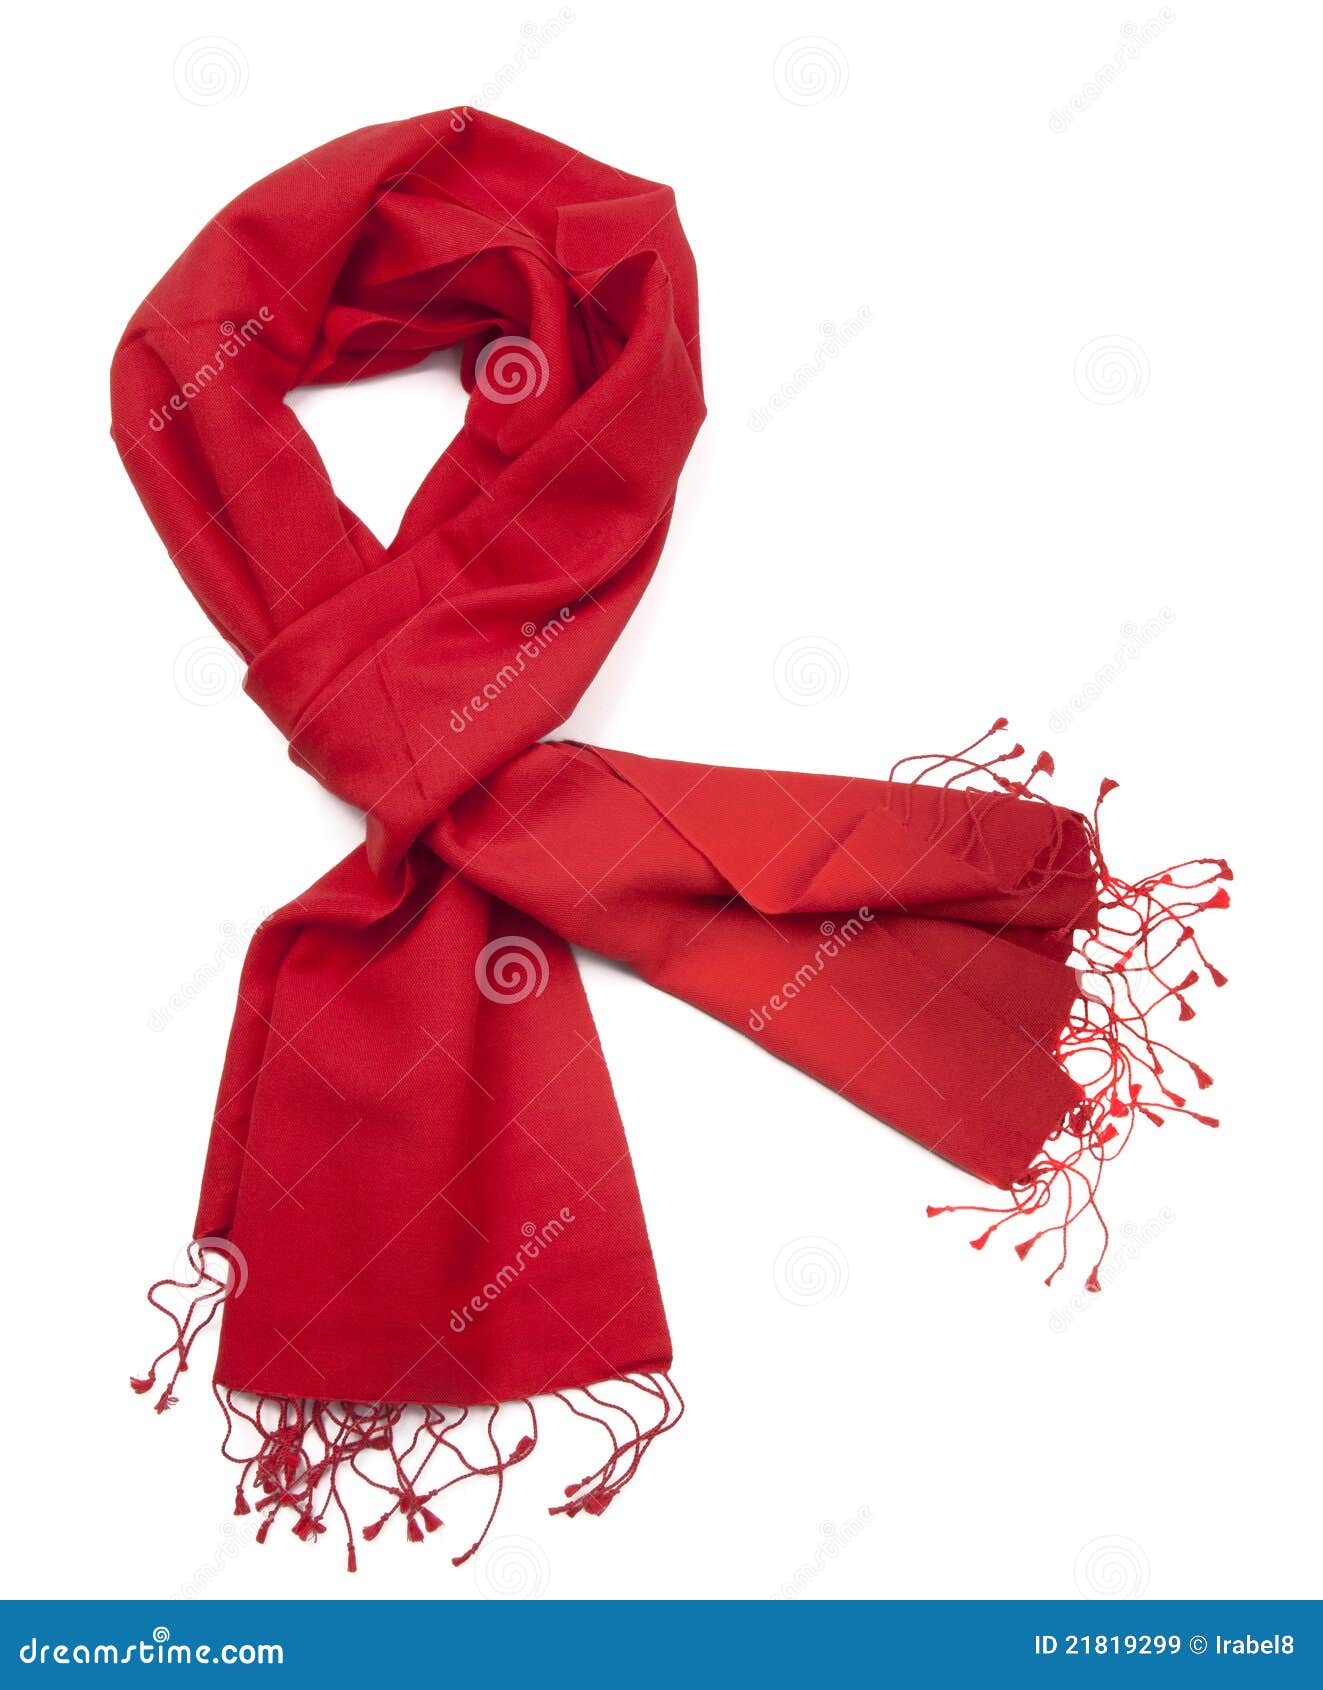 red scarf or pashmina